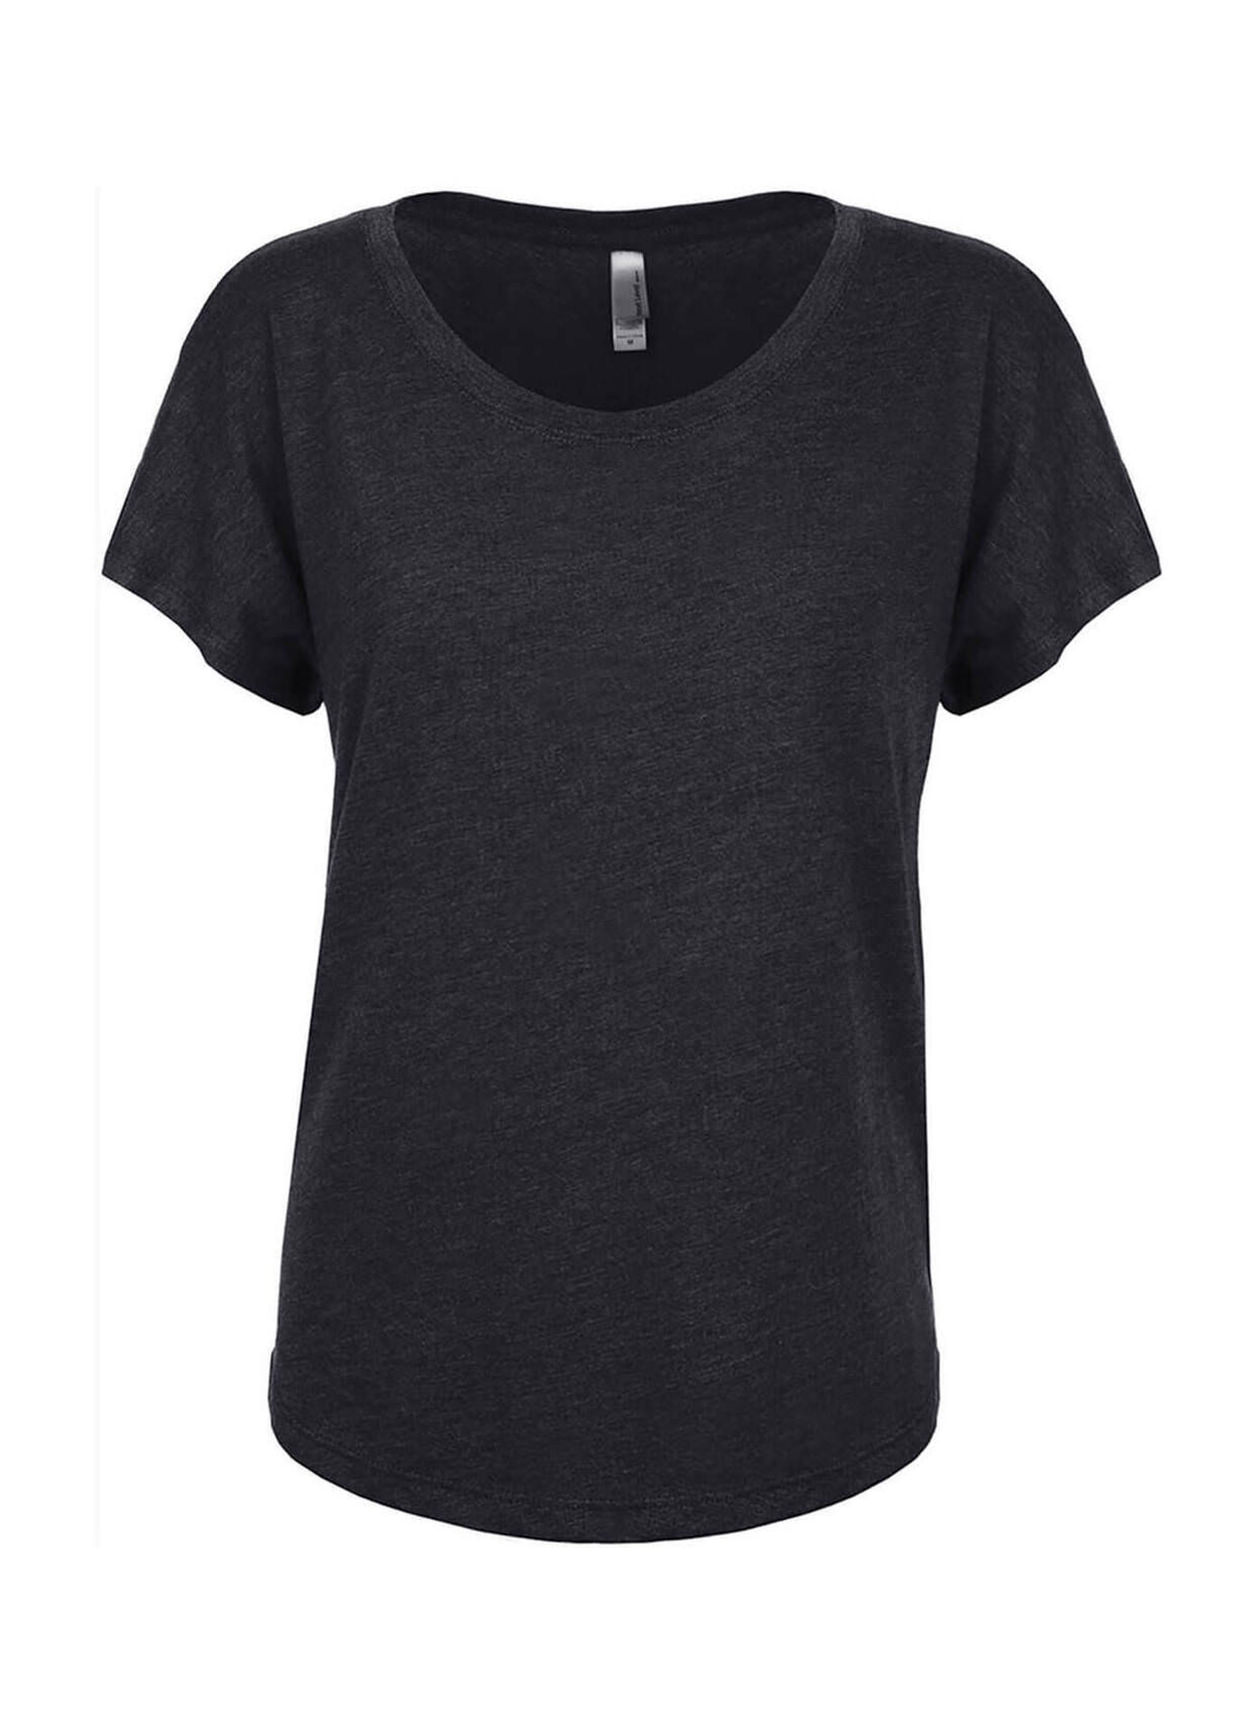 Next Level Women's Vintage Black Triblend Dolman T-Shirt